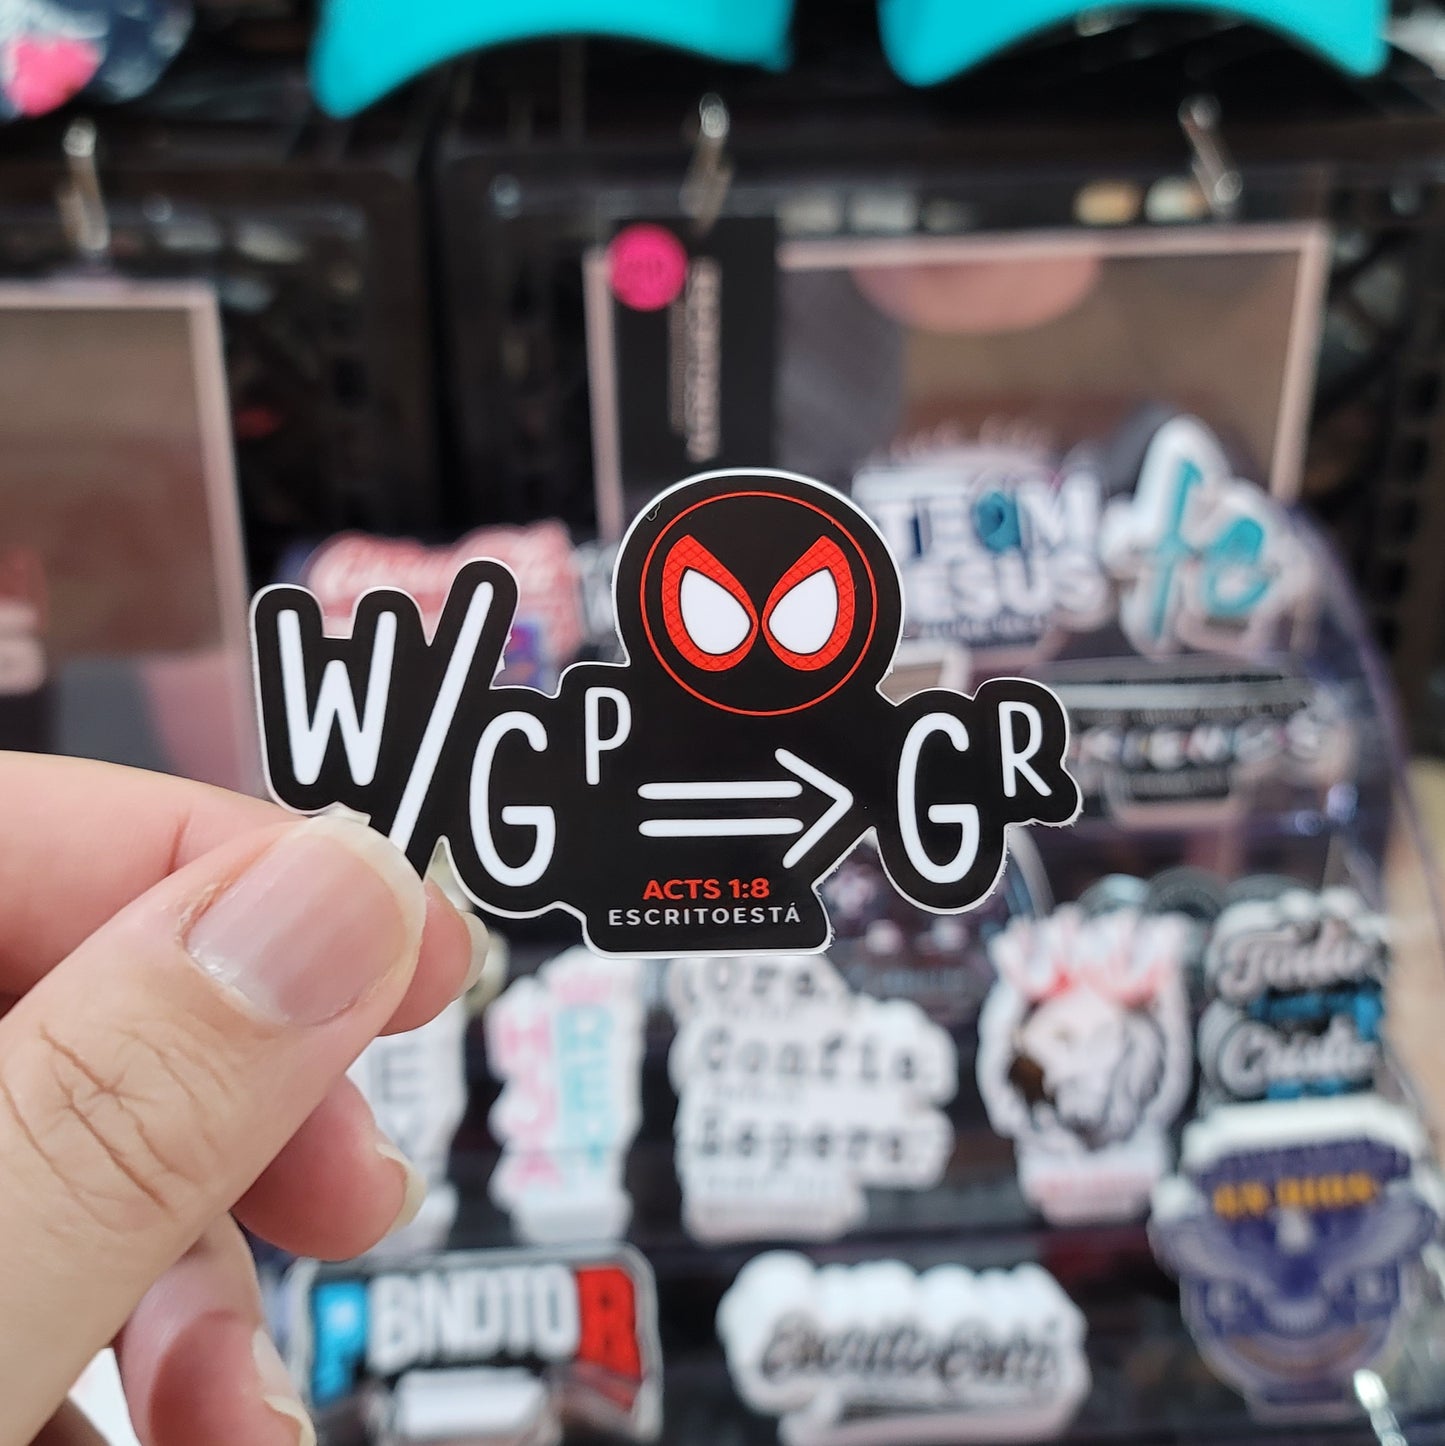 Sticker W/G